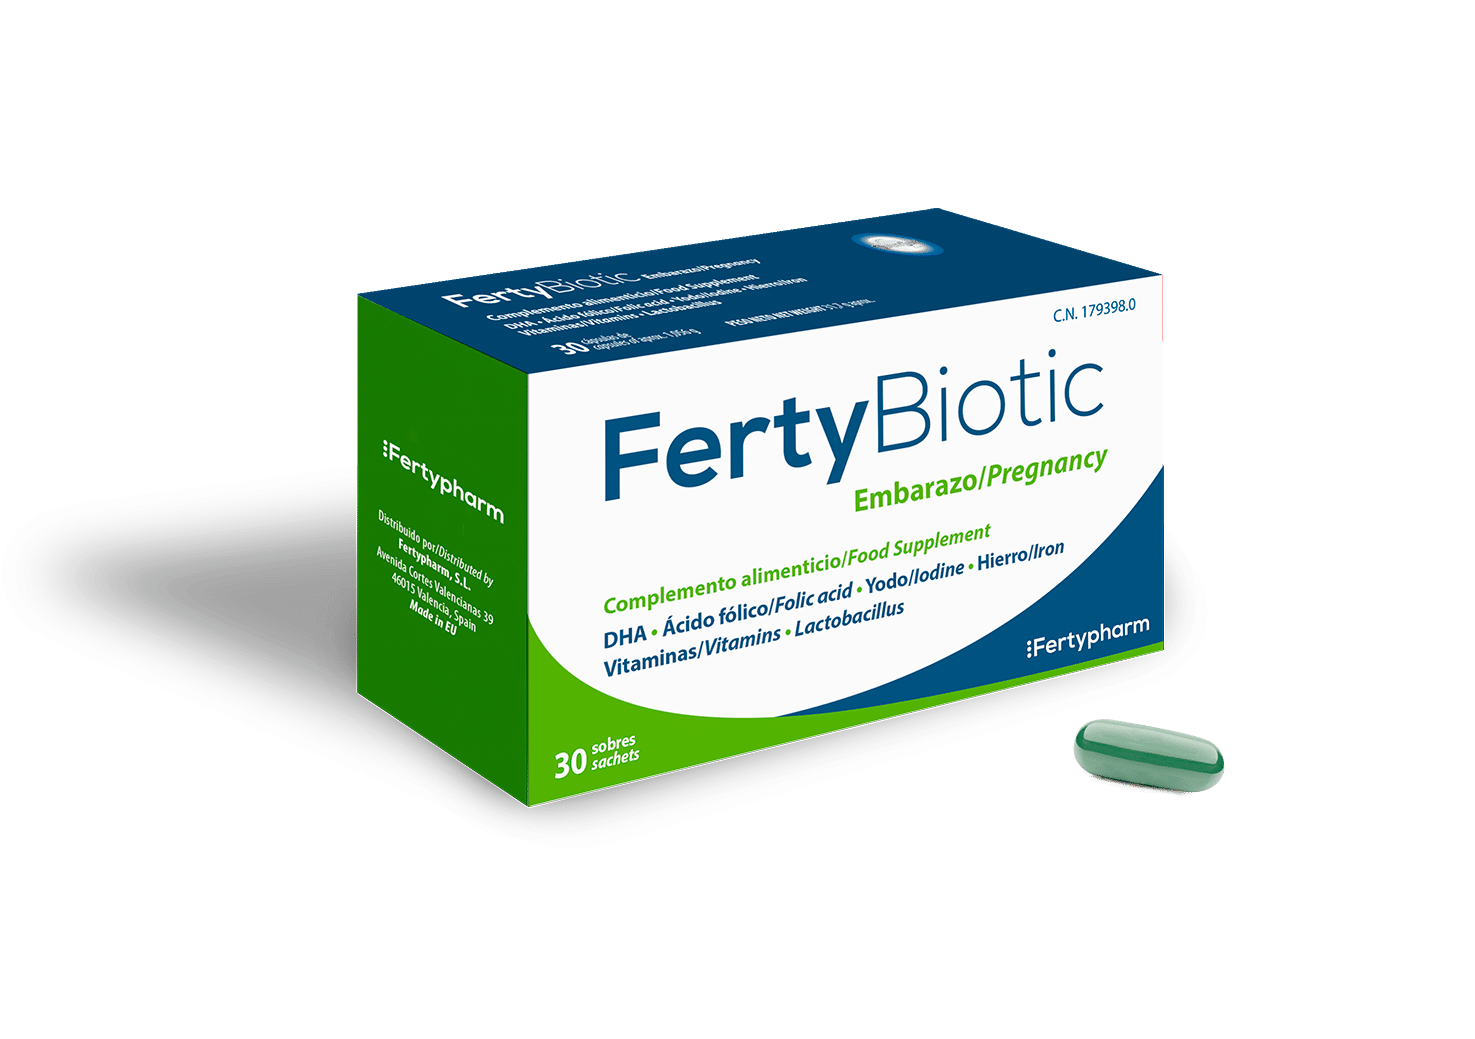 Fertybiotic Embarazo